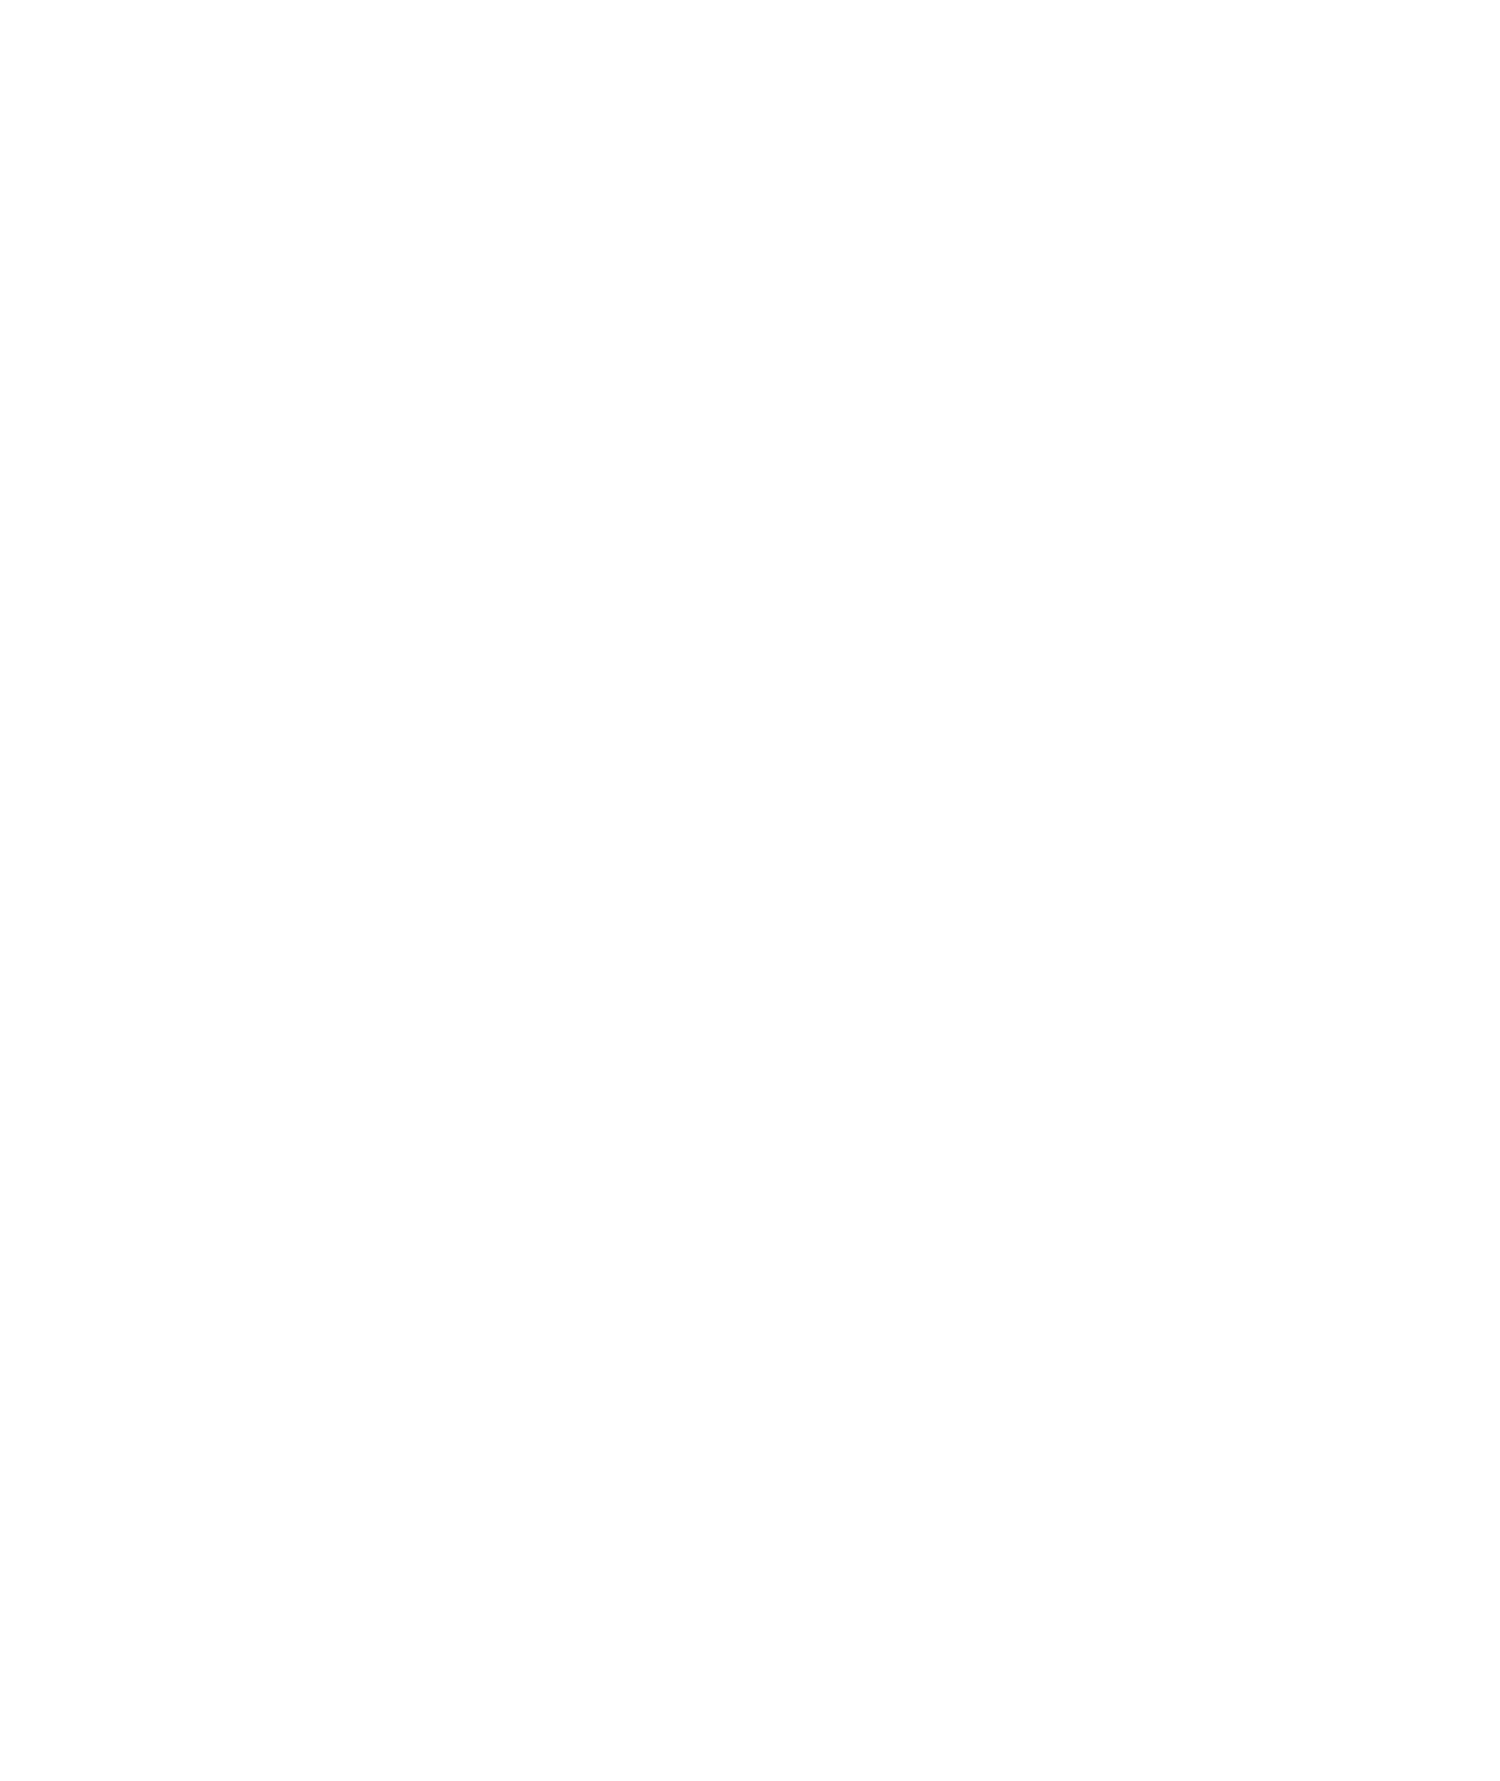 VALLEY ARBS | Tree Surgery Services